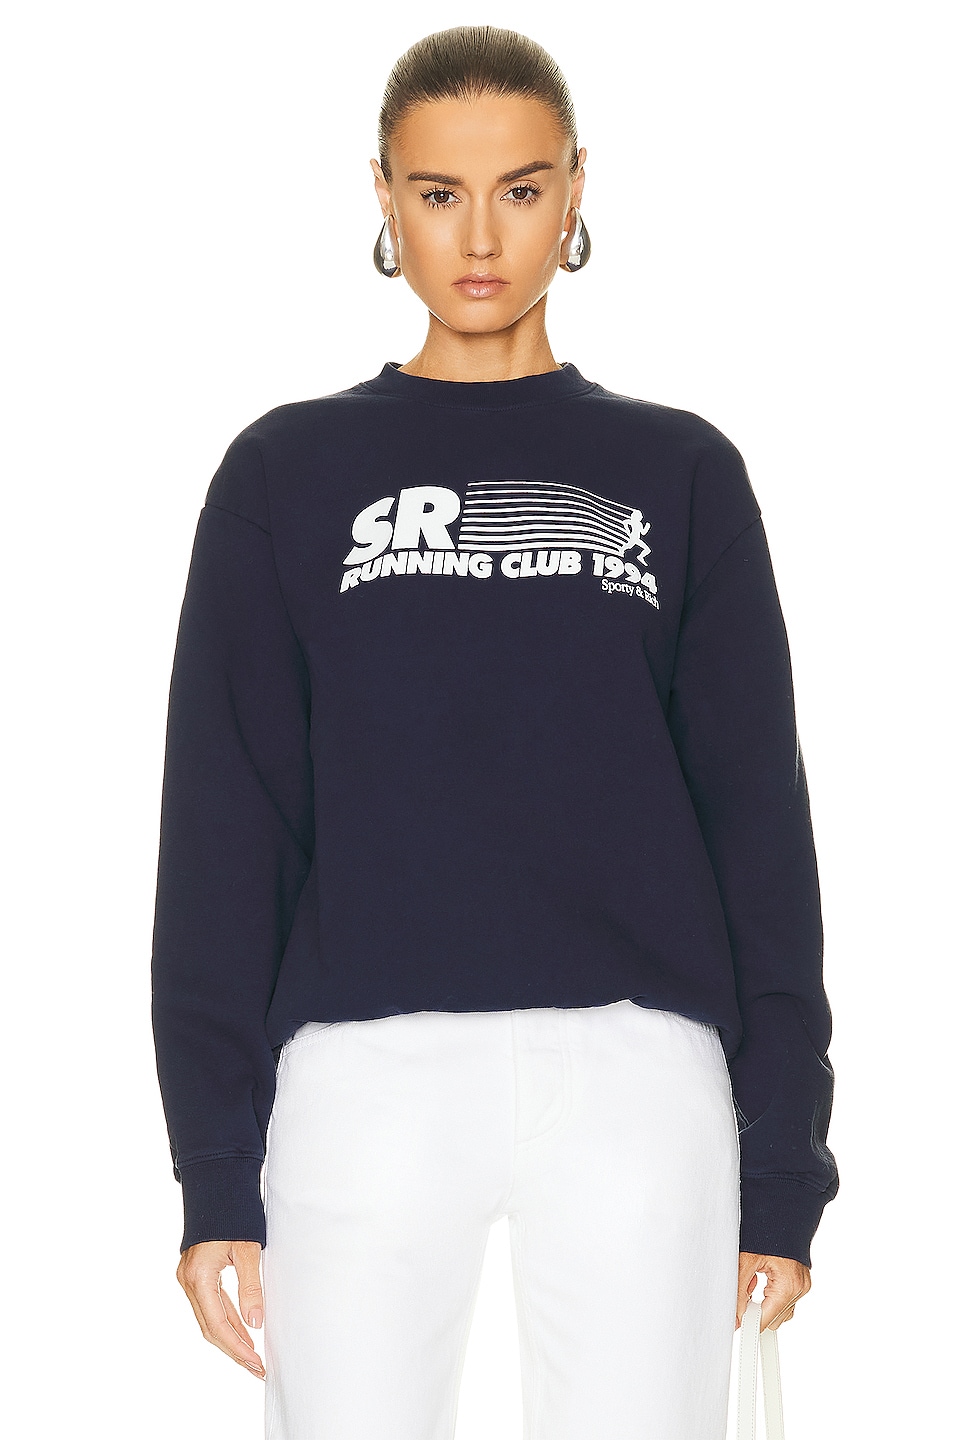 Image 1 of Sporty & Rich SR Running Club Crewneck Sweatshirt in Navy & White